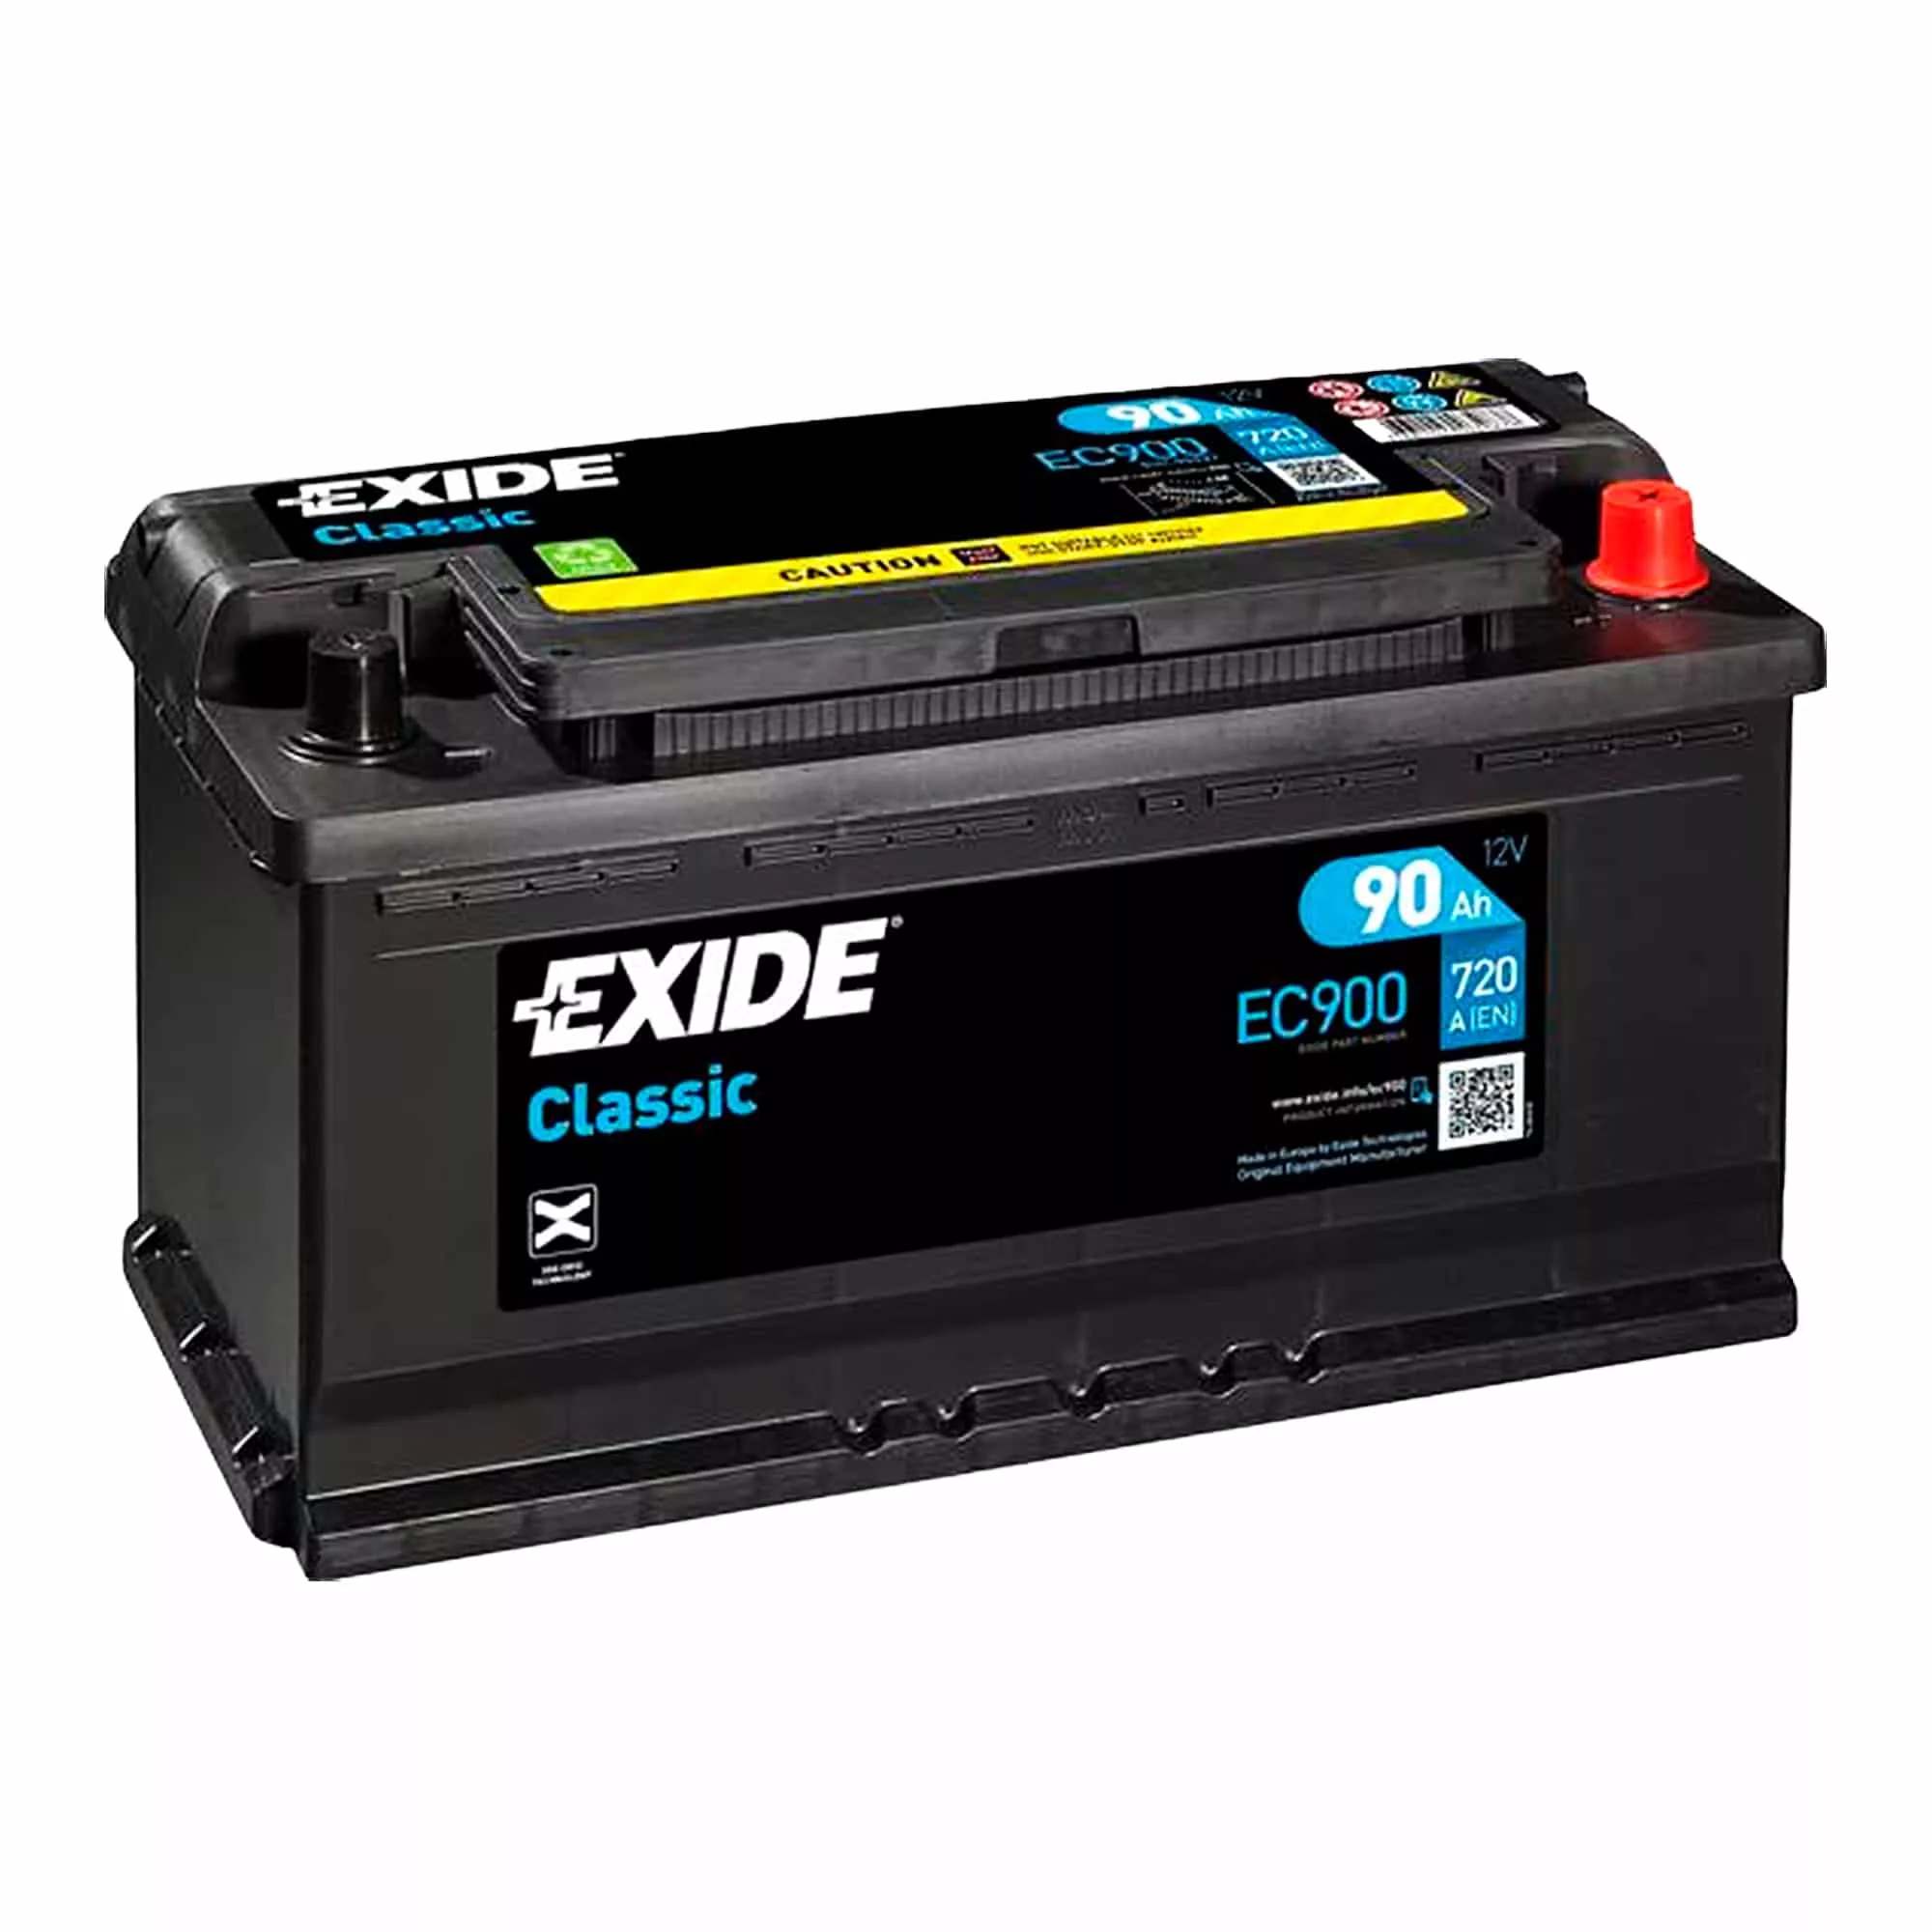 Автомобільний акумулятор EXIDE 6СТ-90 АзЕ CLASSIC (EC900)